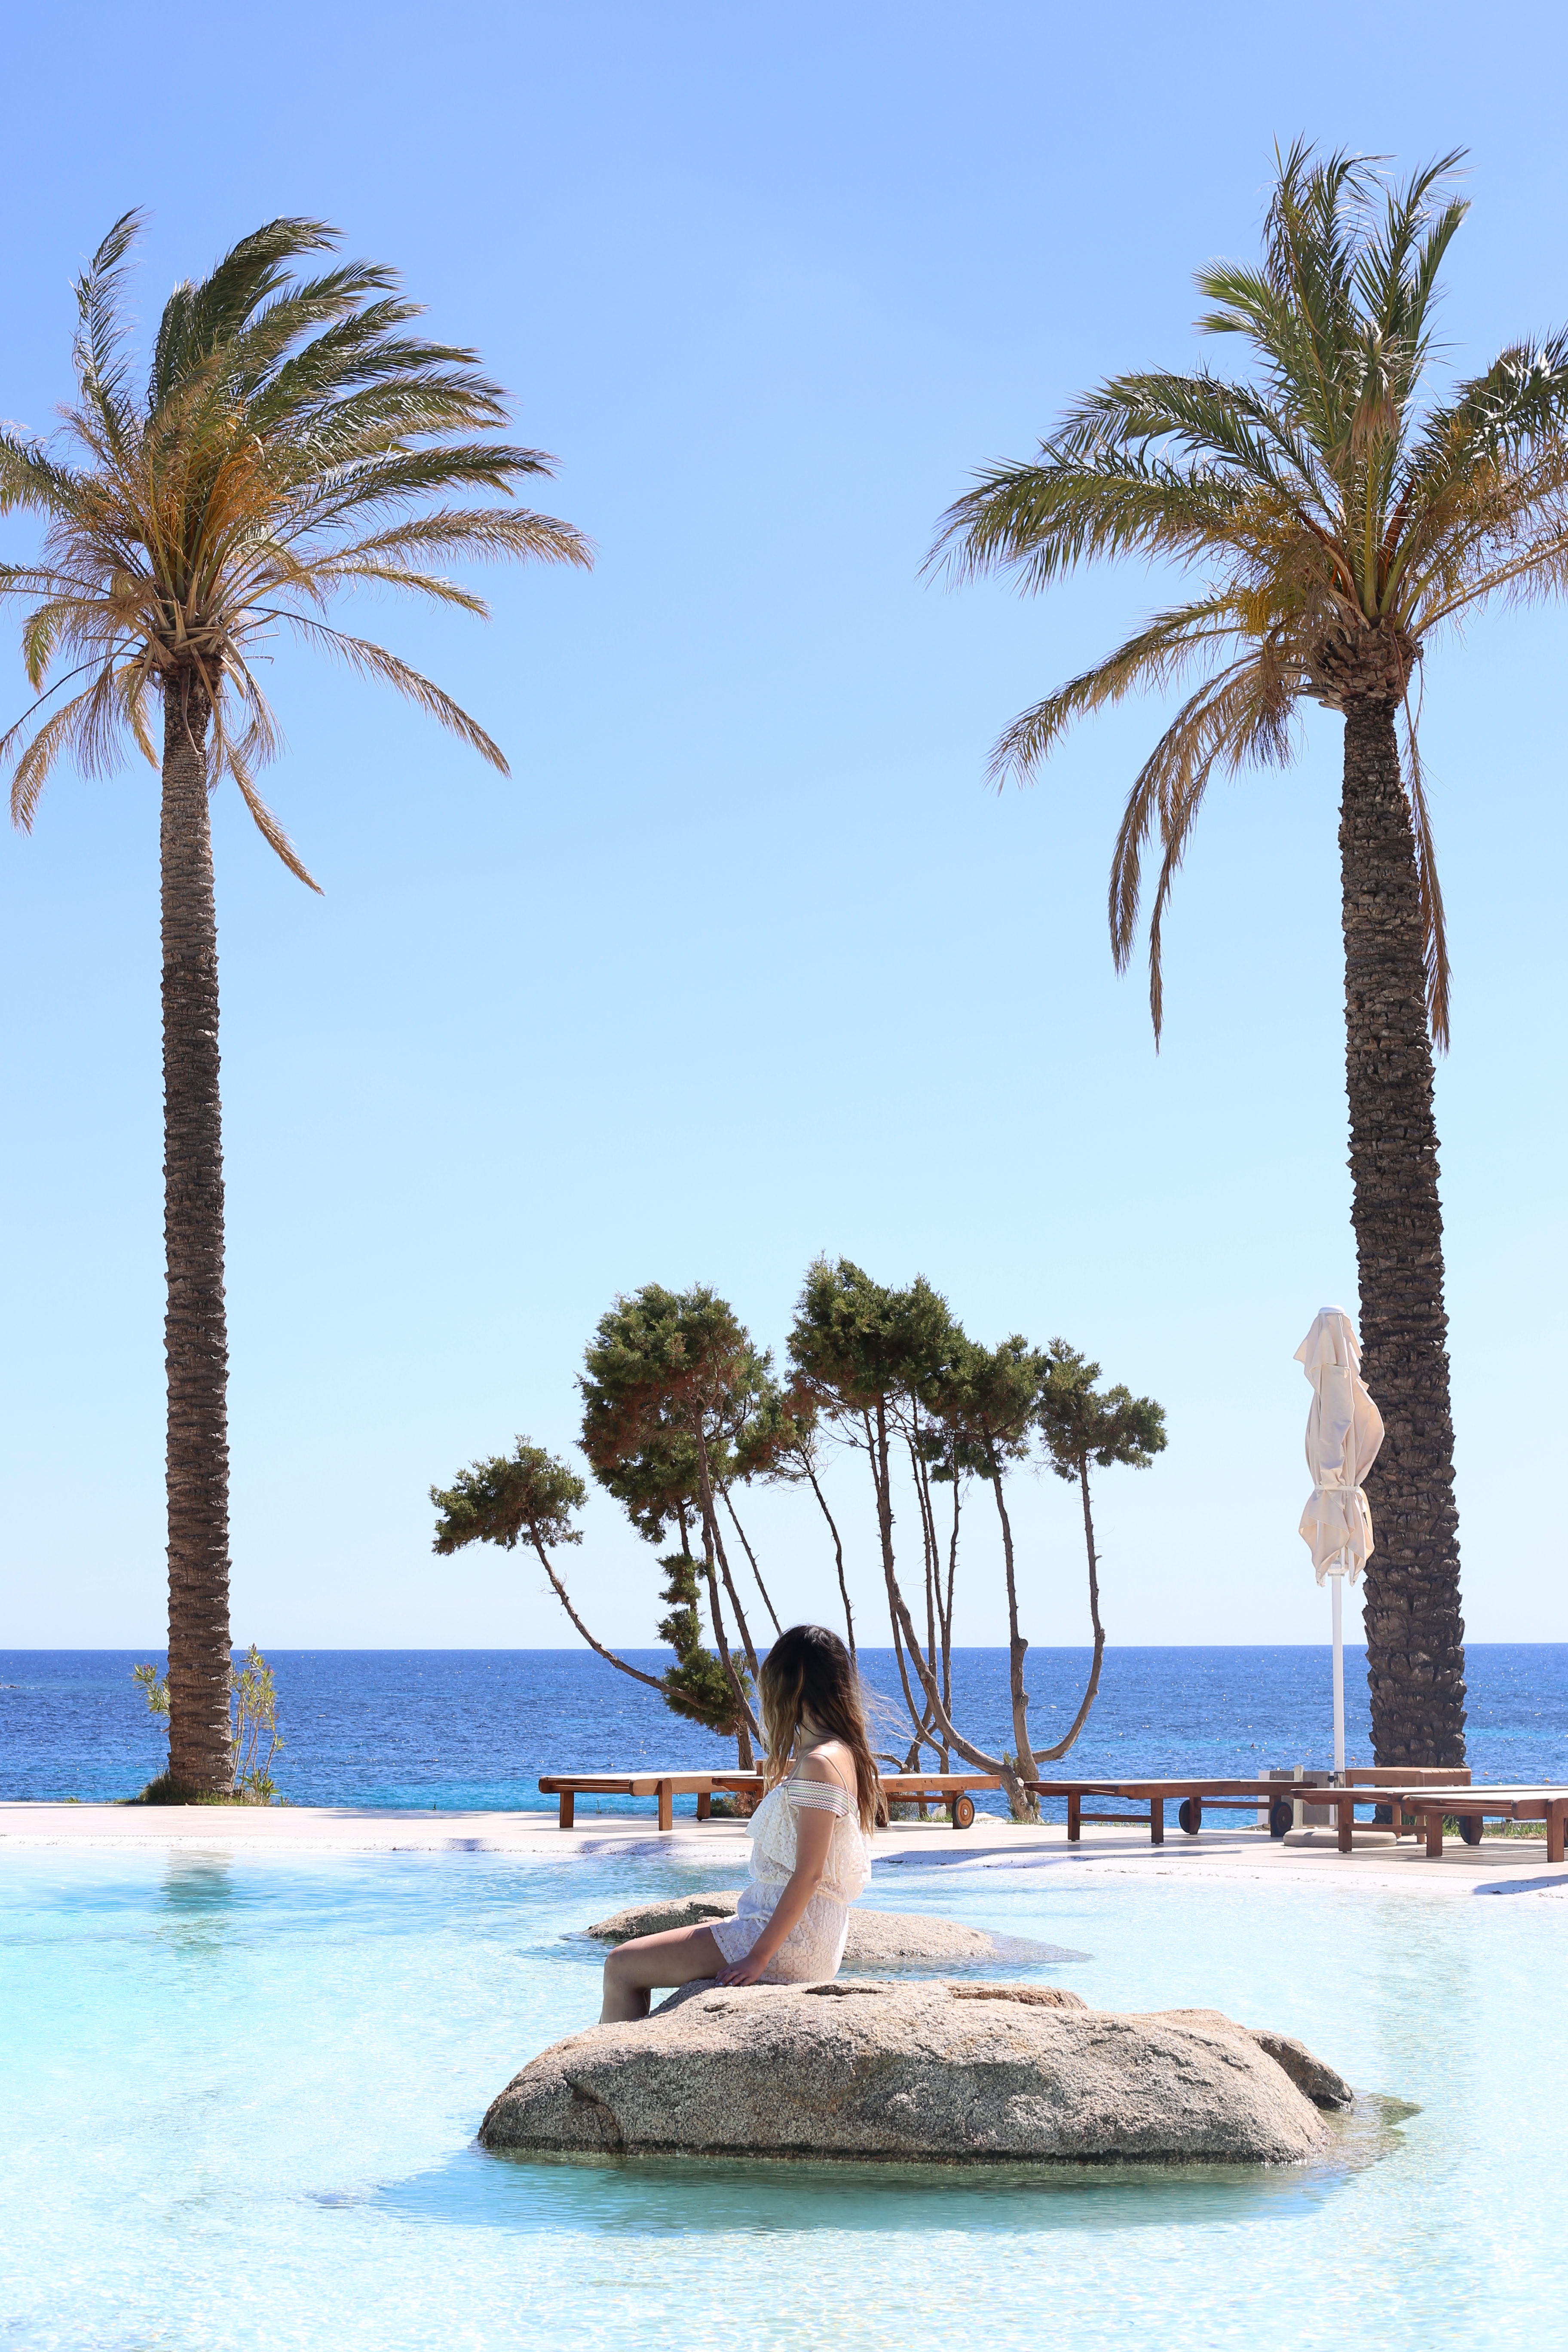 Falkensteiner Resort Capo Boi in Sardinia (Hotel Review)